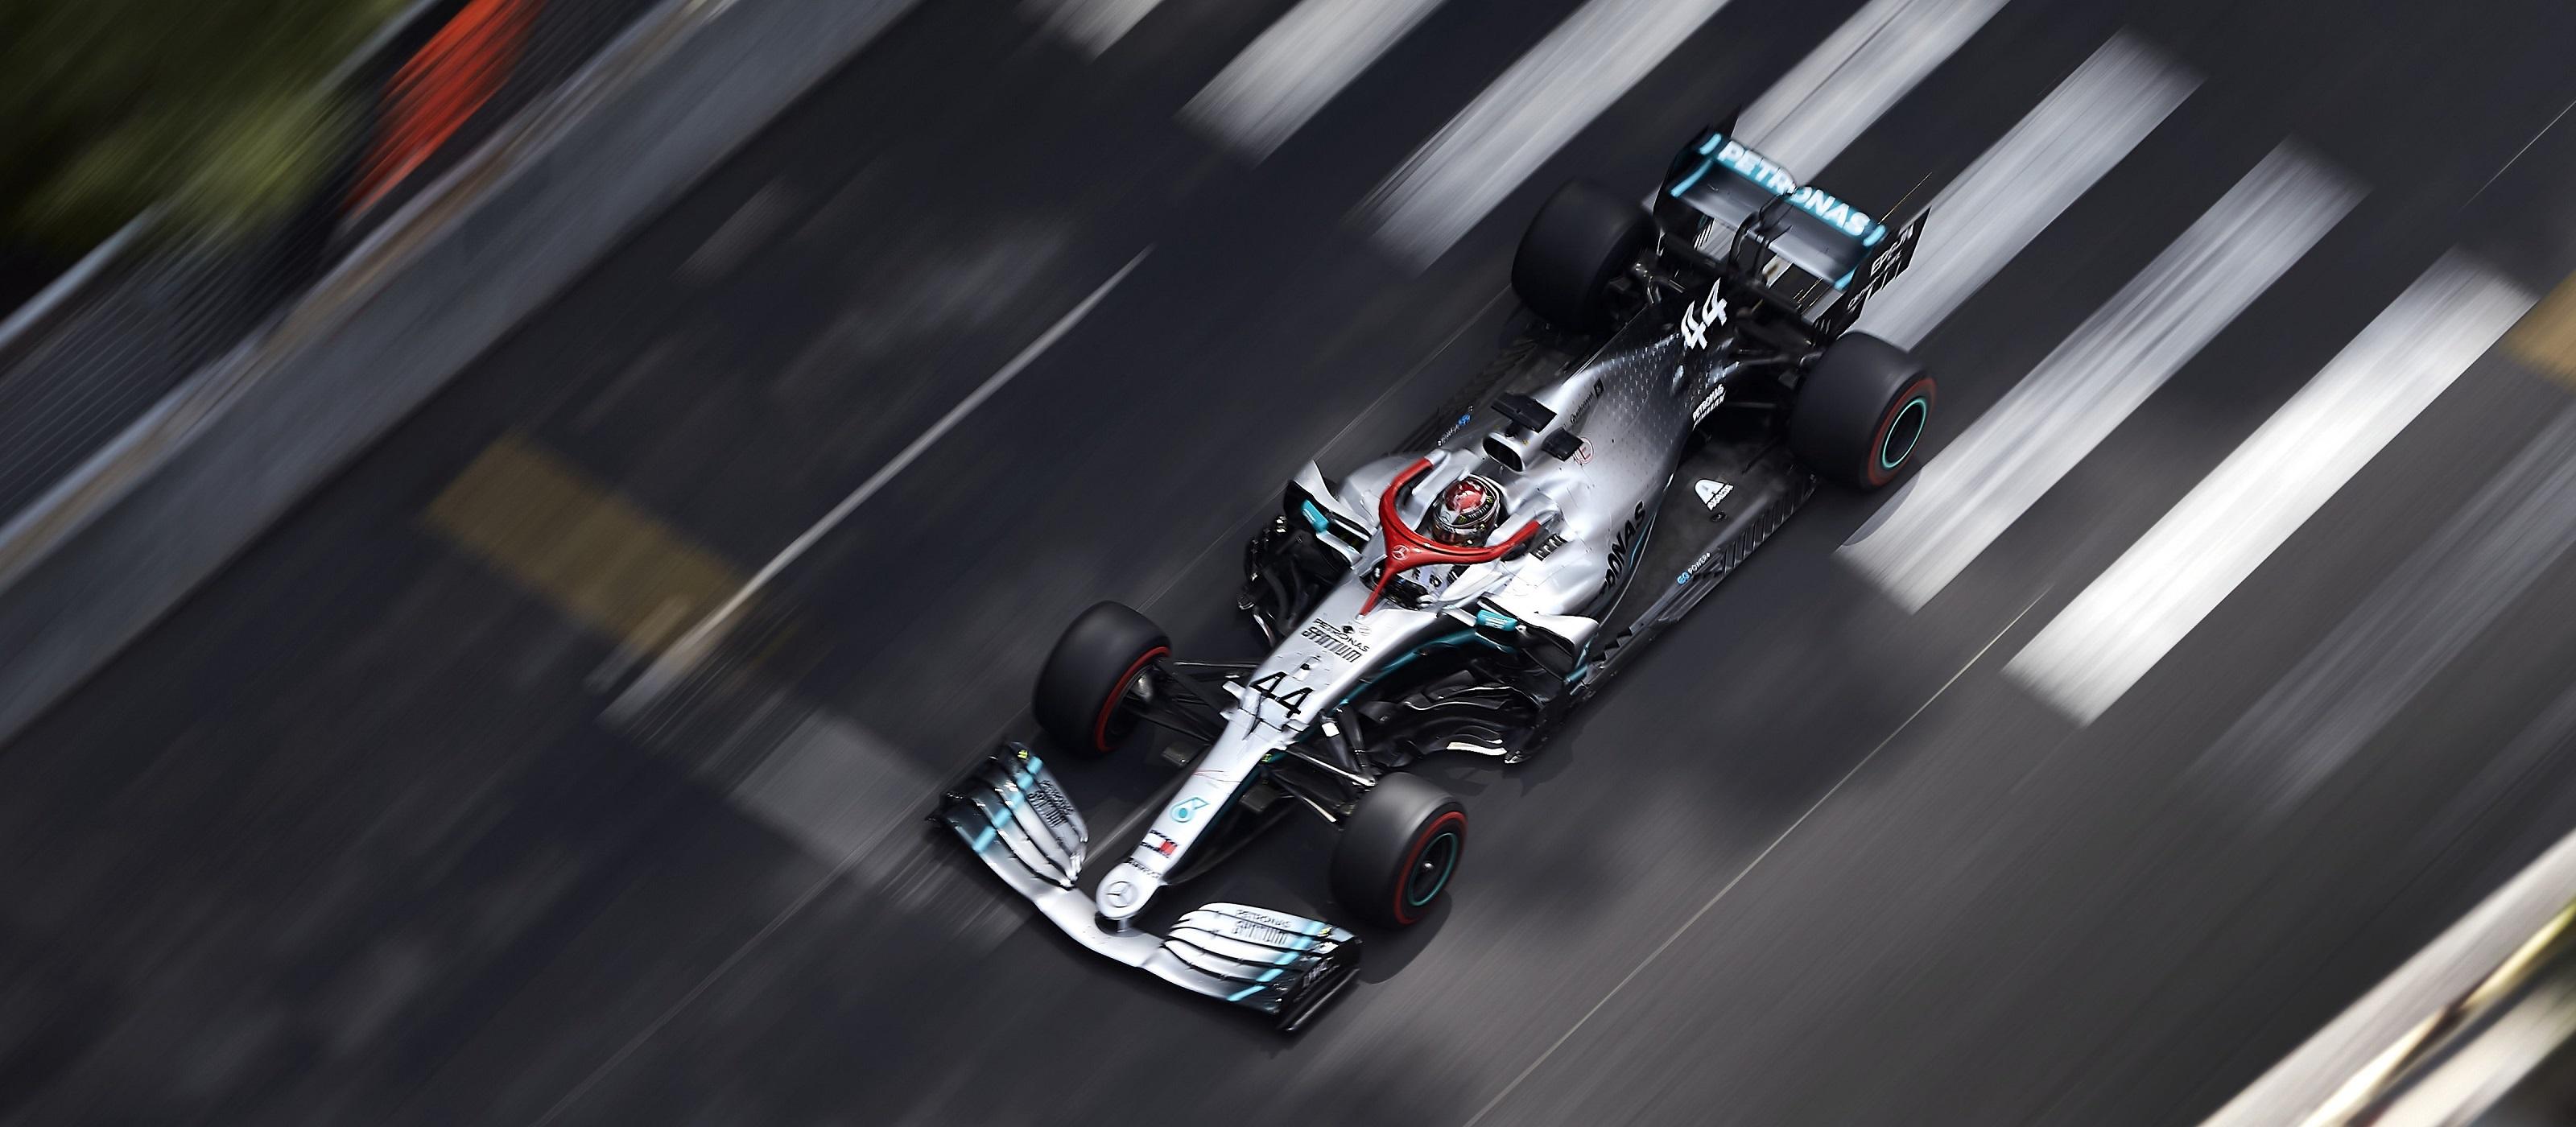 The best photo from Monaco: Lewis Hamilton's masterful